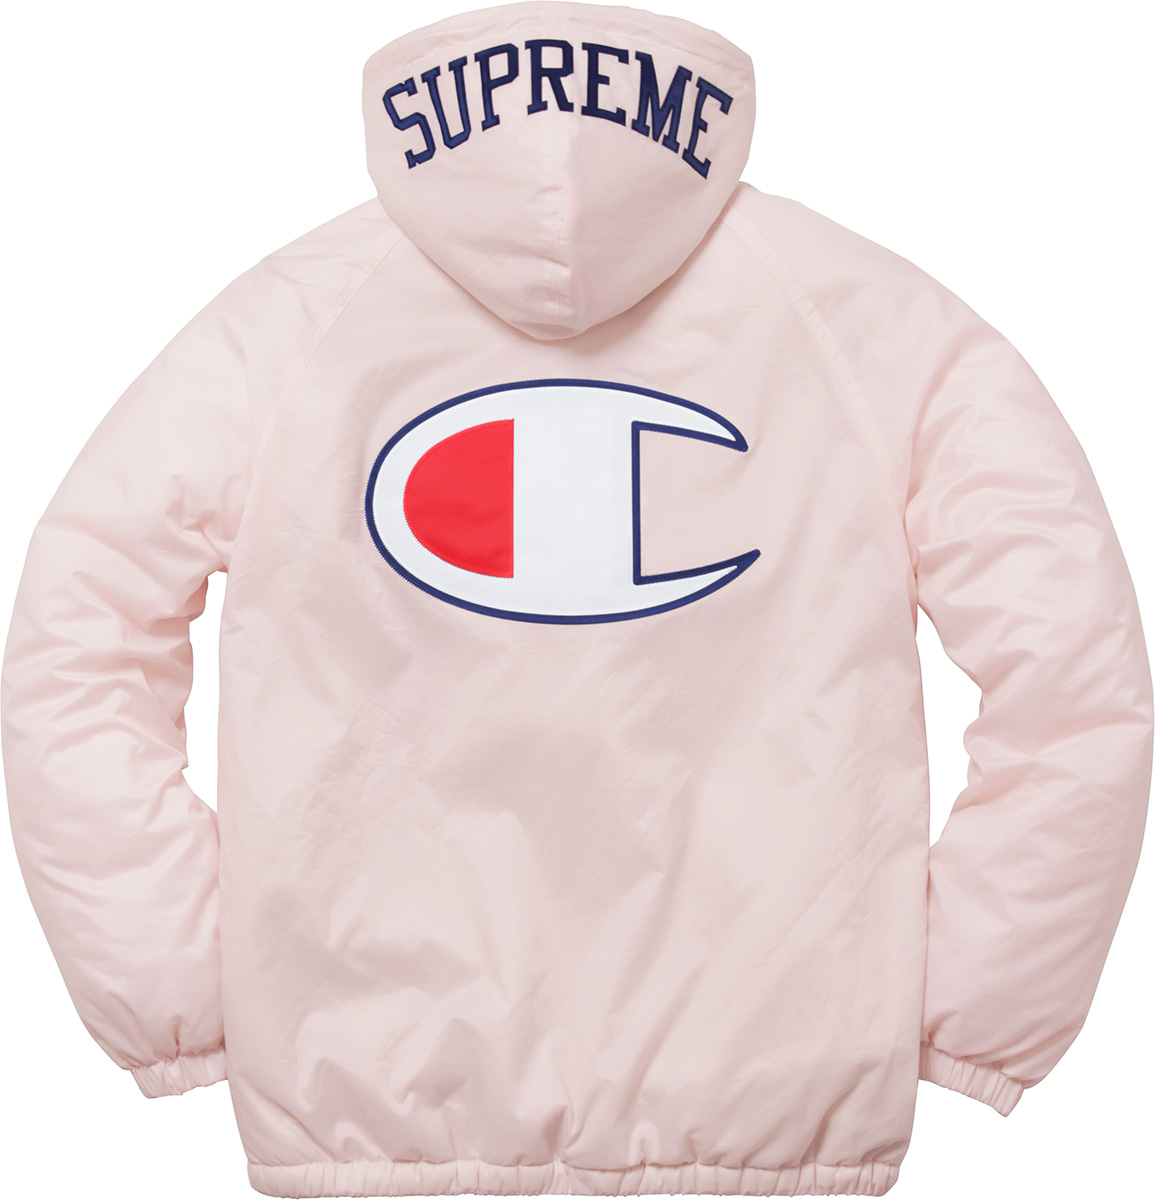 Supreme®/Champion® Sherpa Lined Hooded Jacket - Supreme Community